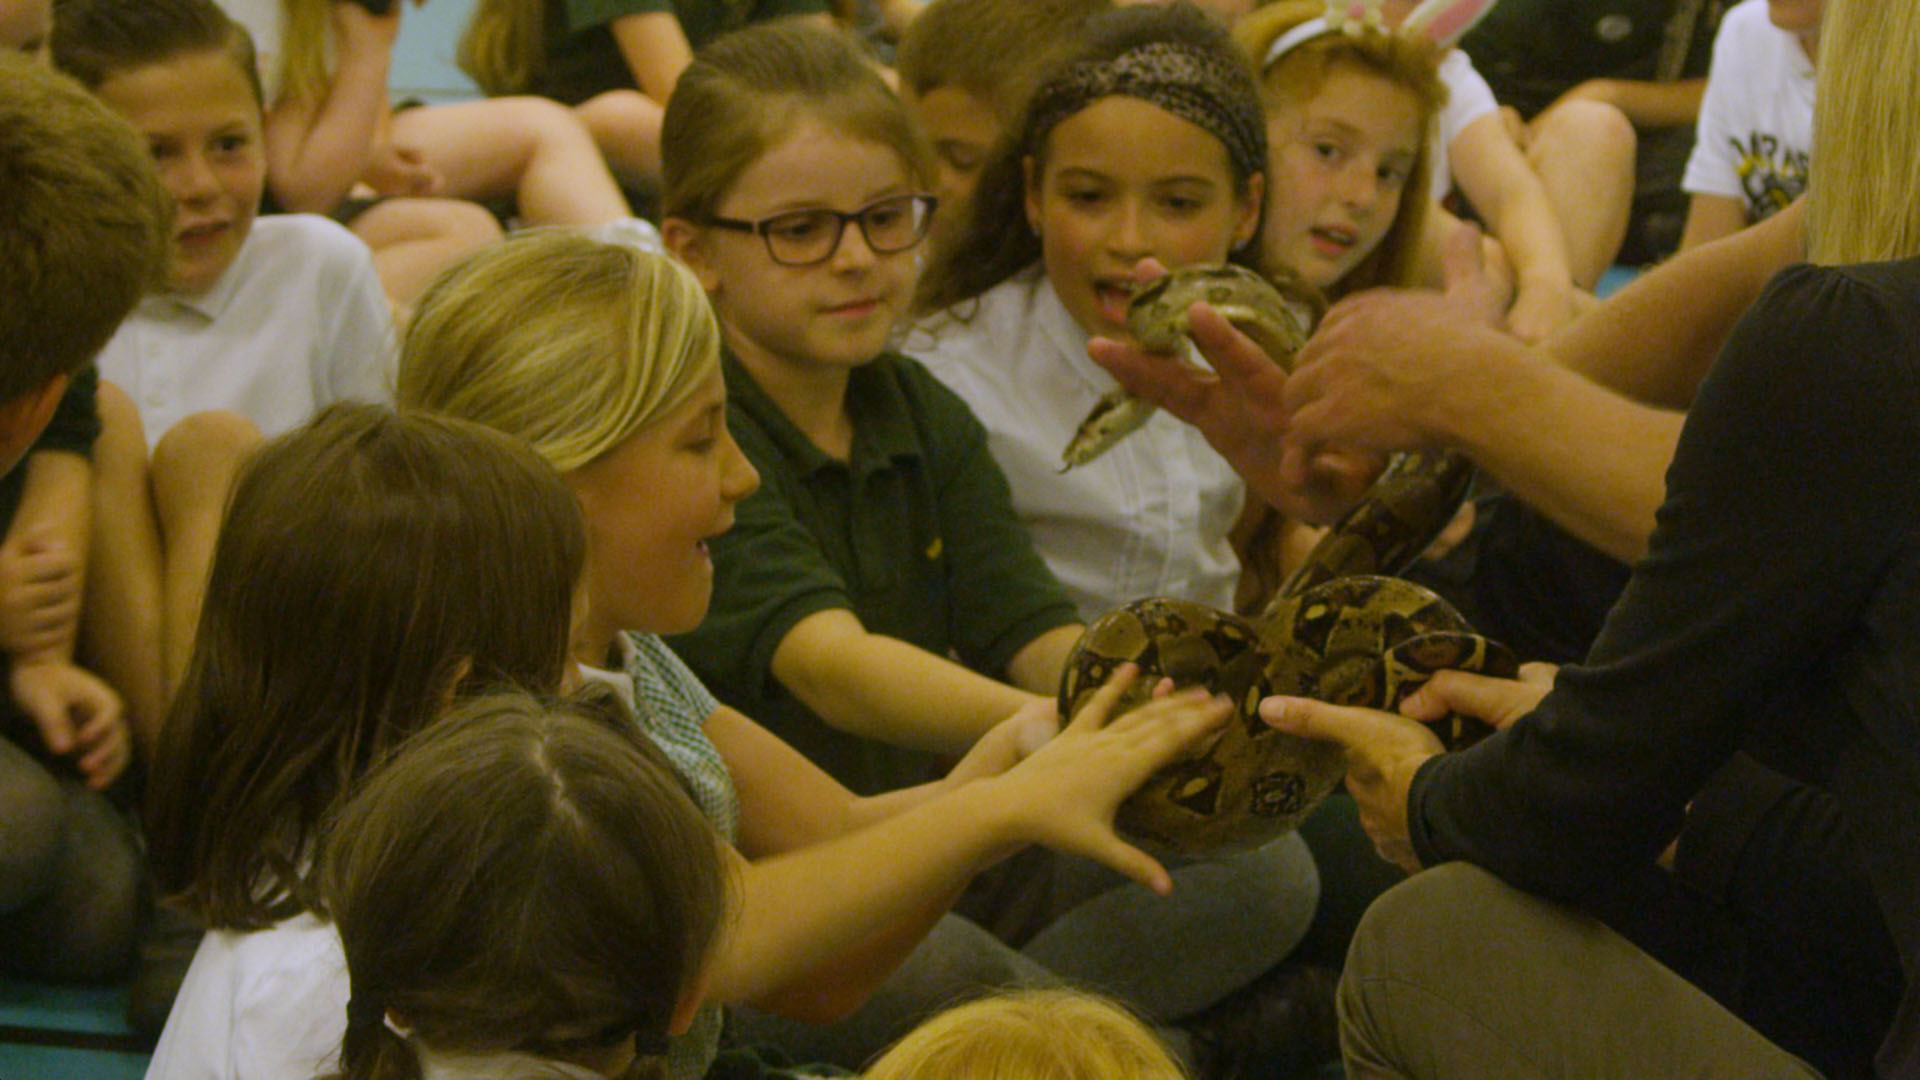 School children holding a snake